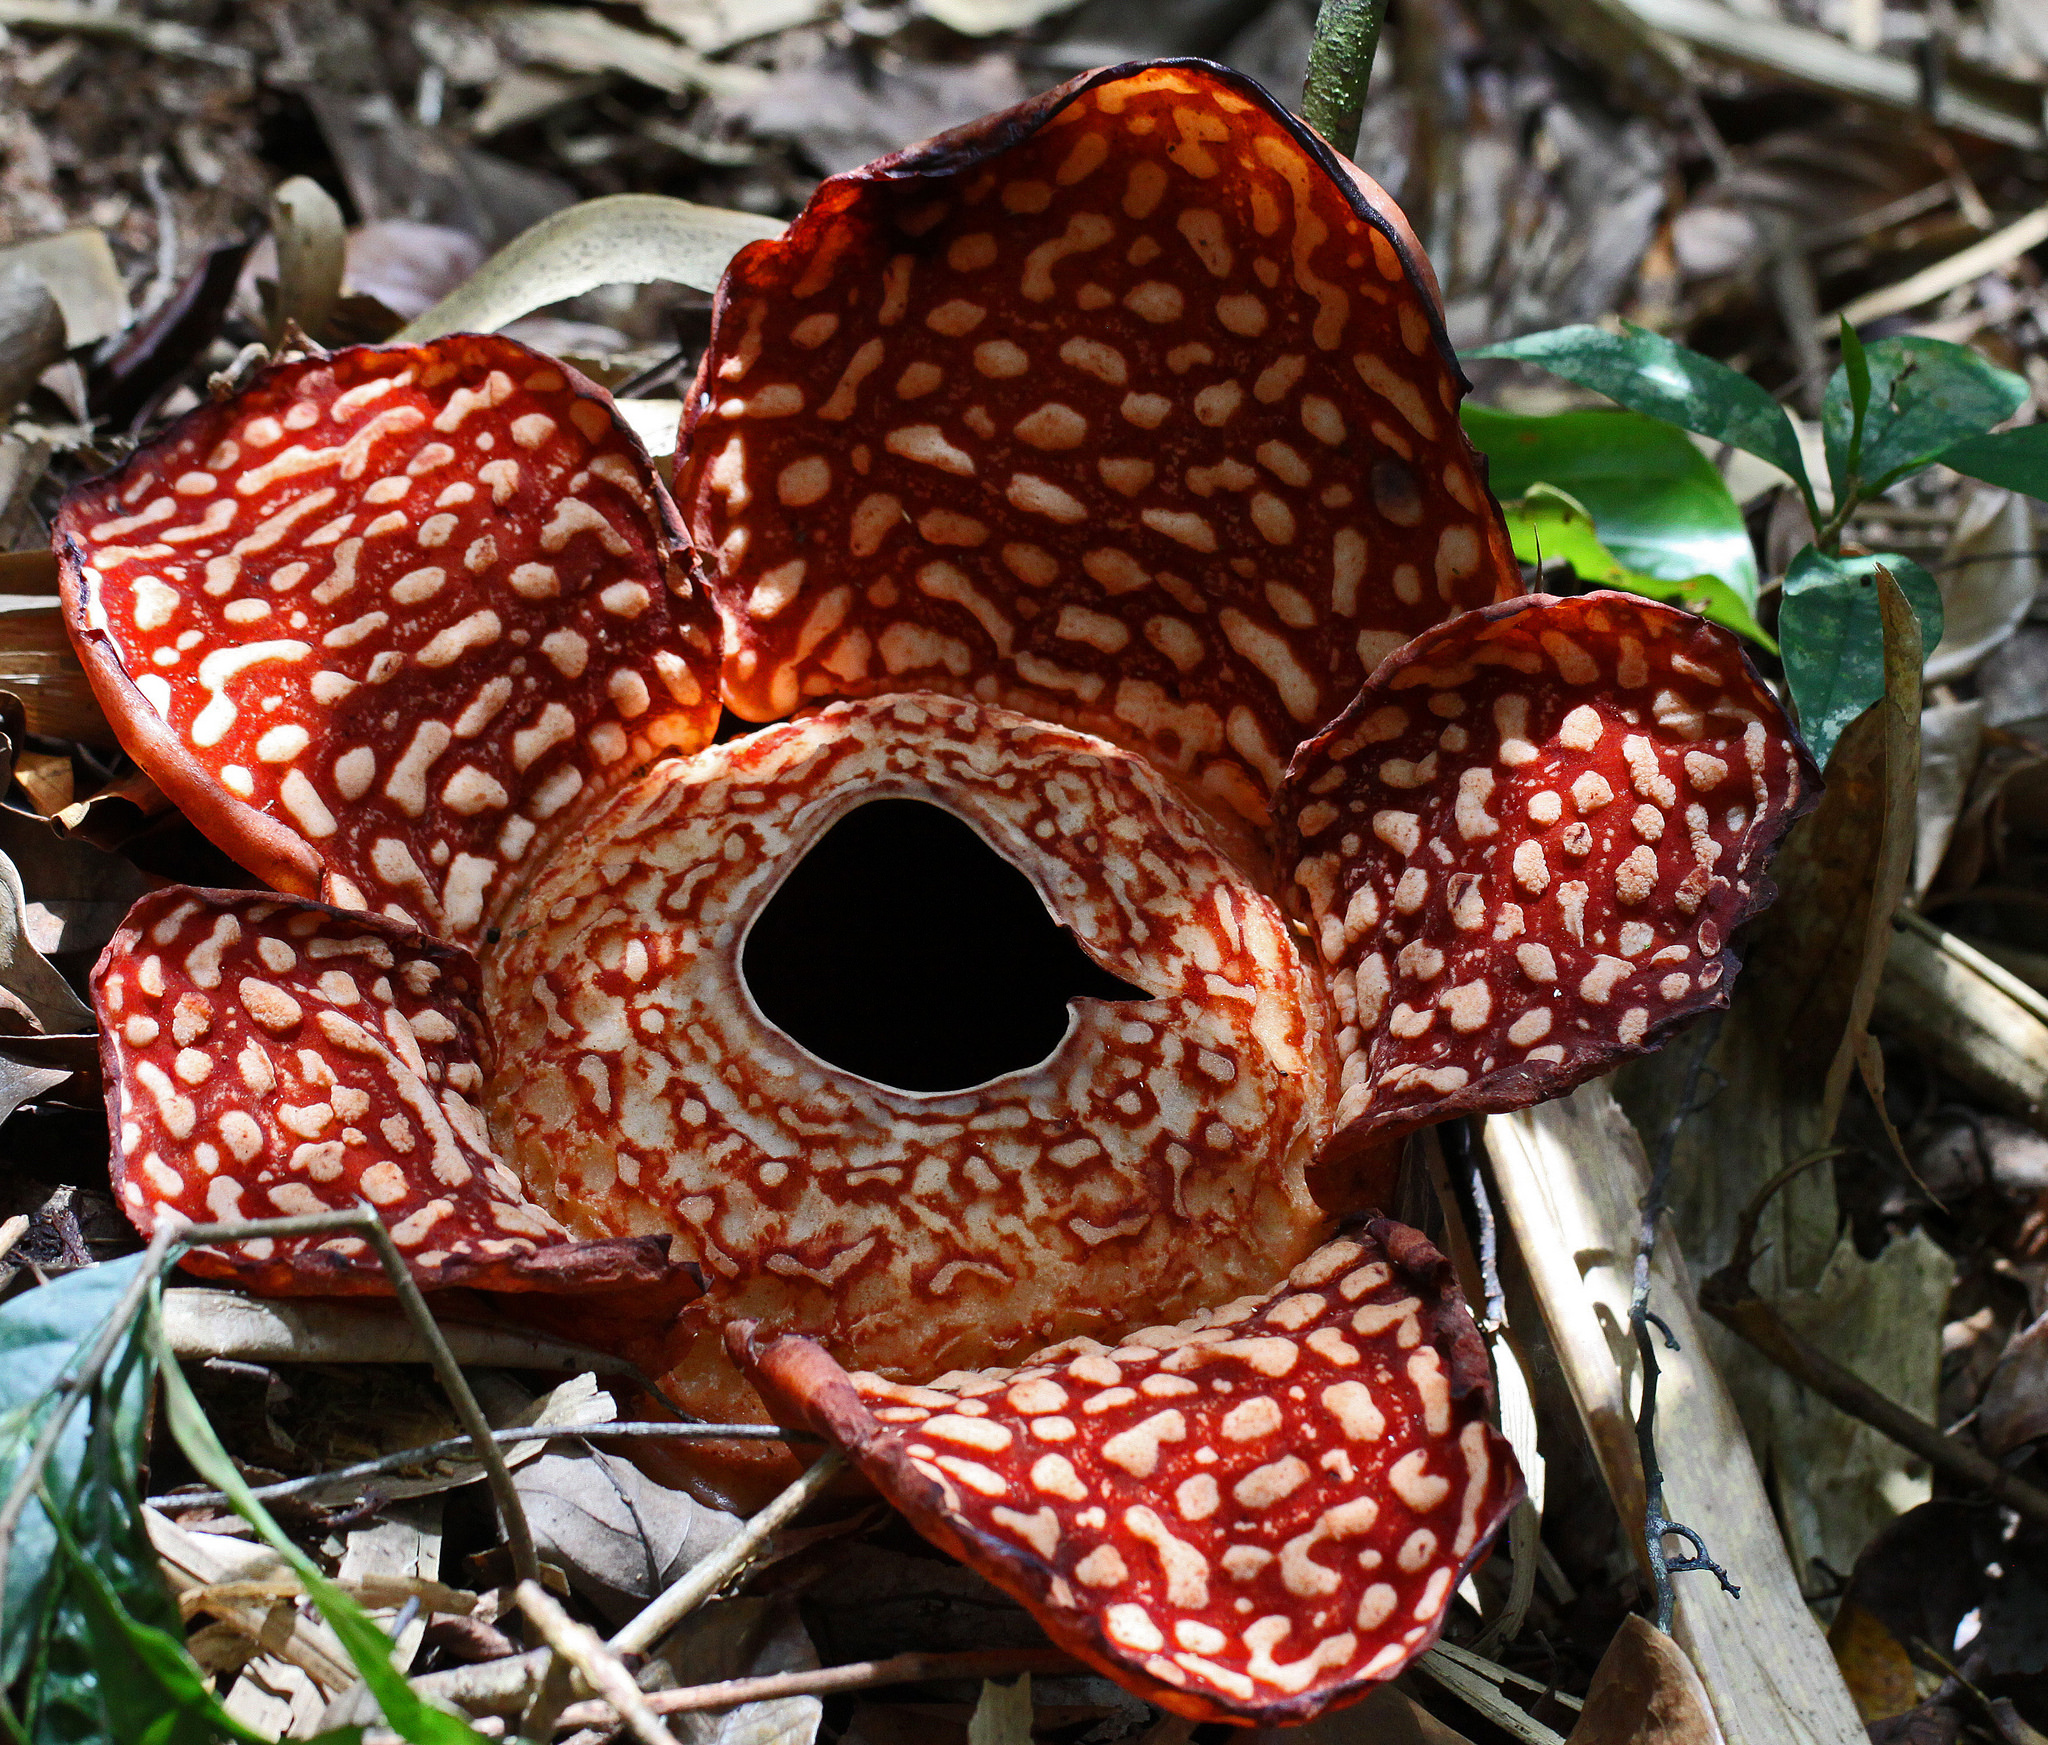 Rafflesia | Photo credit: vil.sandi